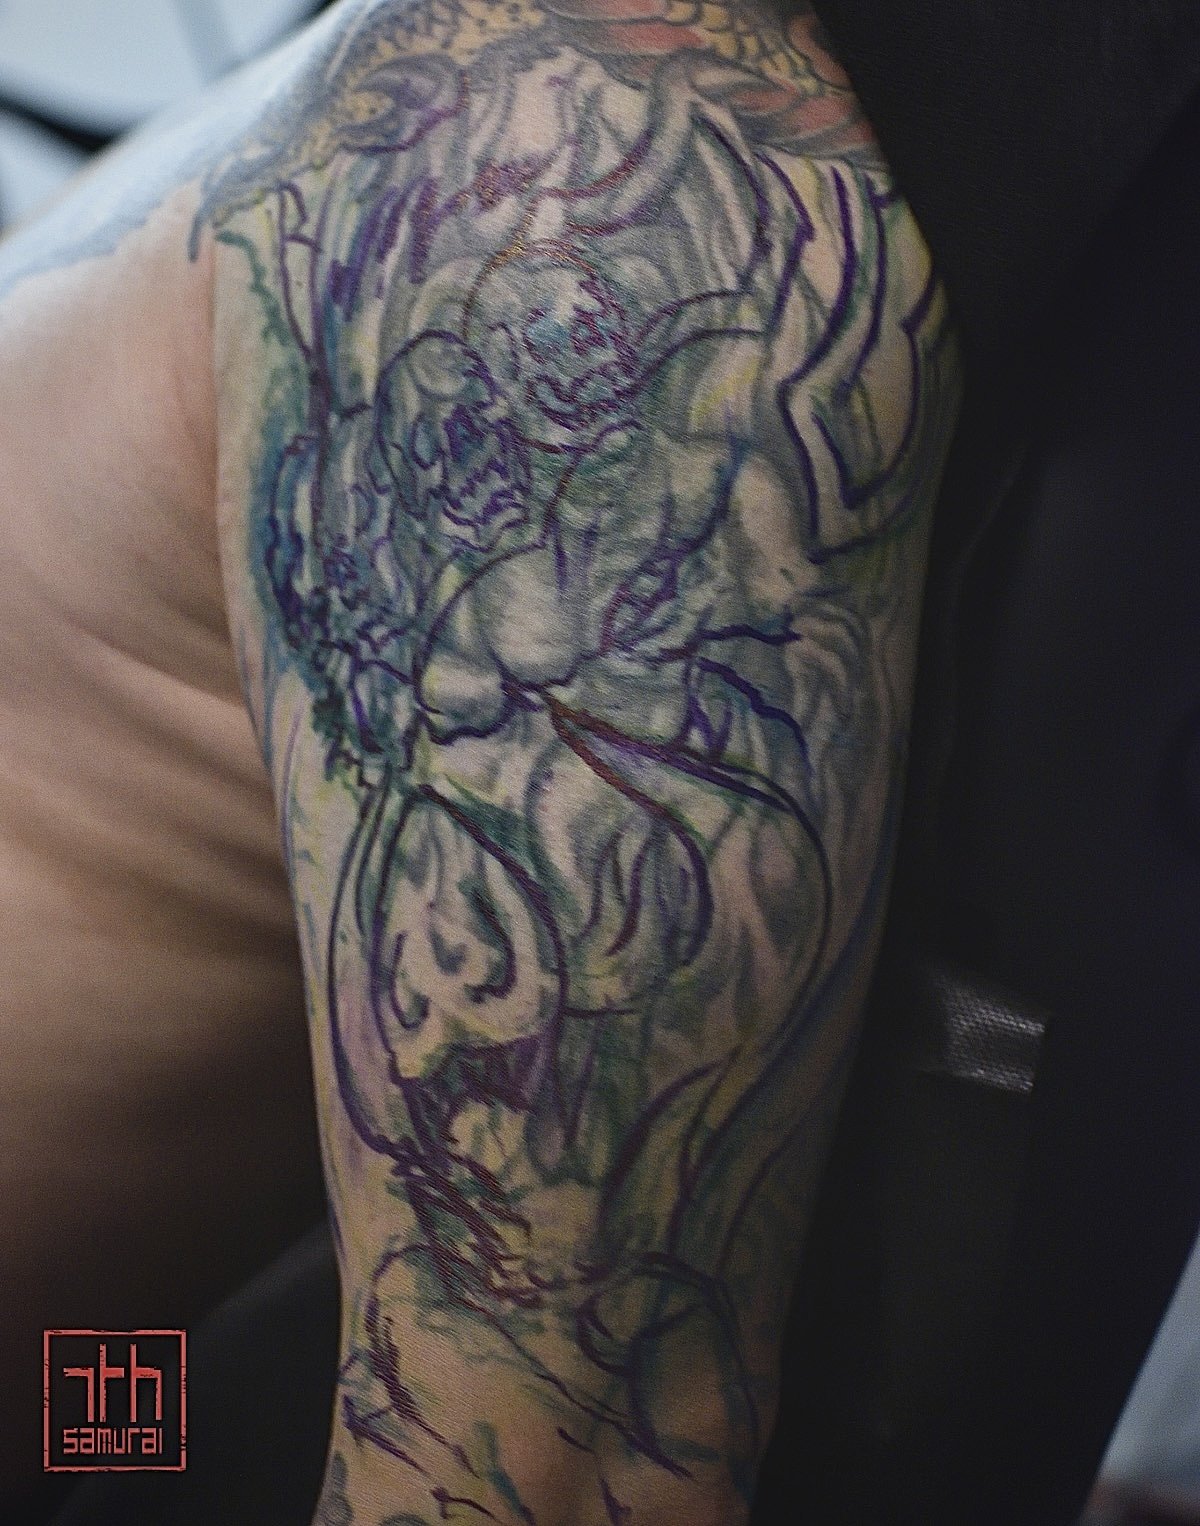 Boar pig warrior cover up  freehand demon  Men's neo japanese upper arm tattoo  asian artist: Kai 7th Samurai. YEG Edmonton, Alberta, Canada 2023 best 2024 